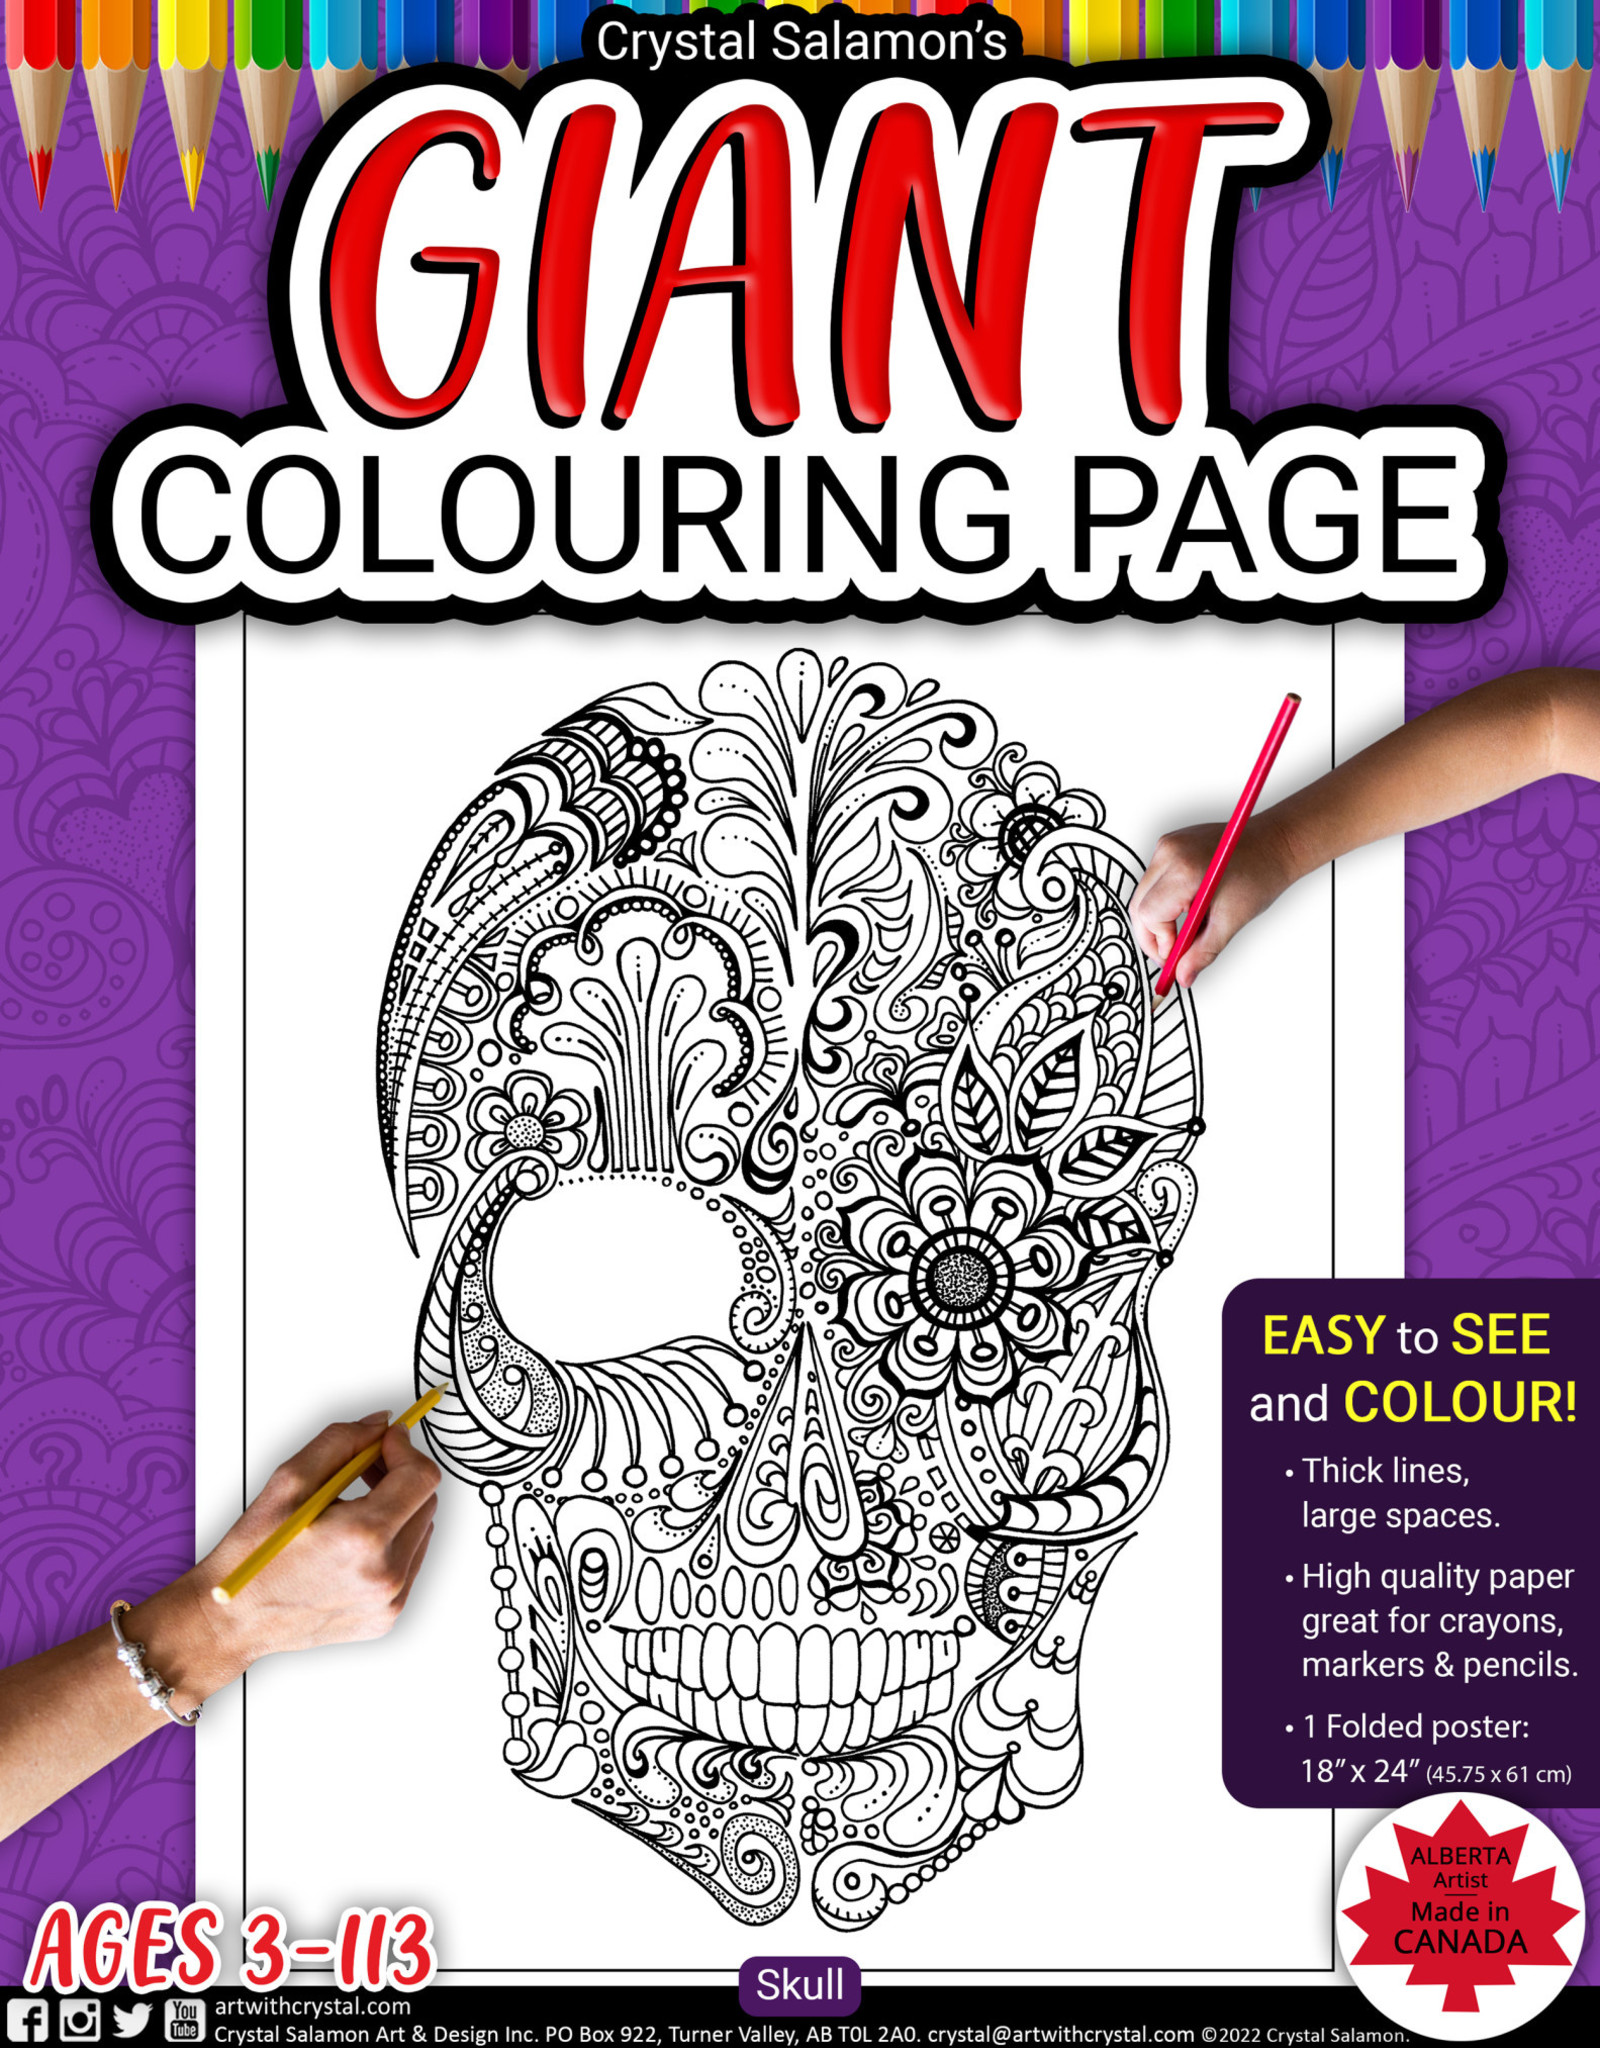 Crystal Salamon Giant Colouring Page - Skull 24" x 18"